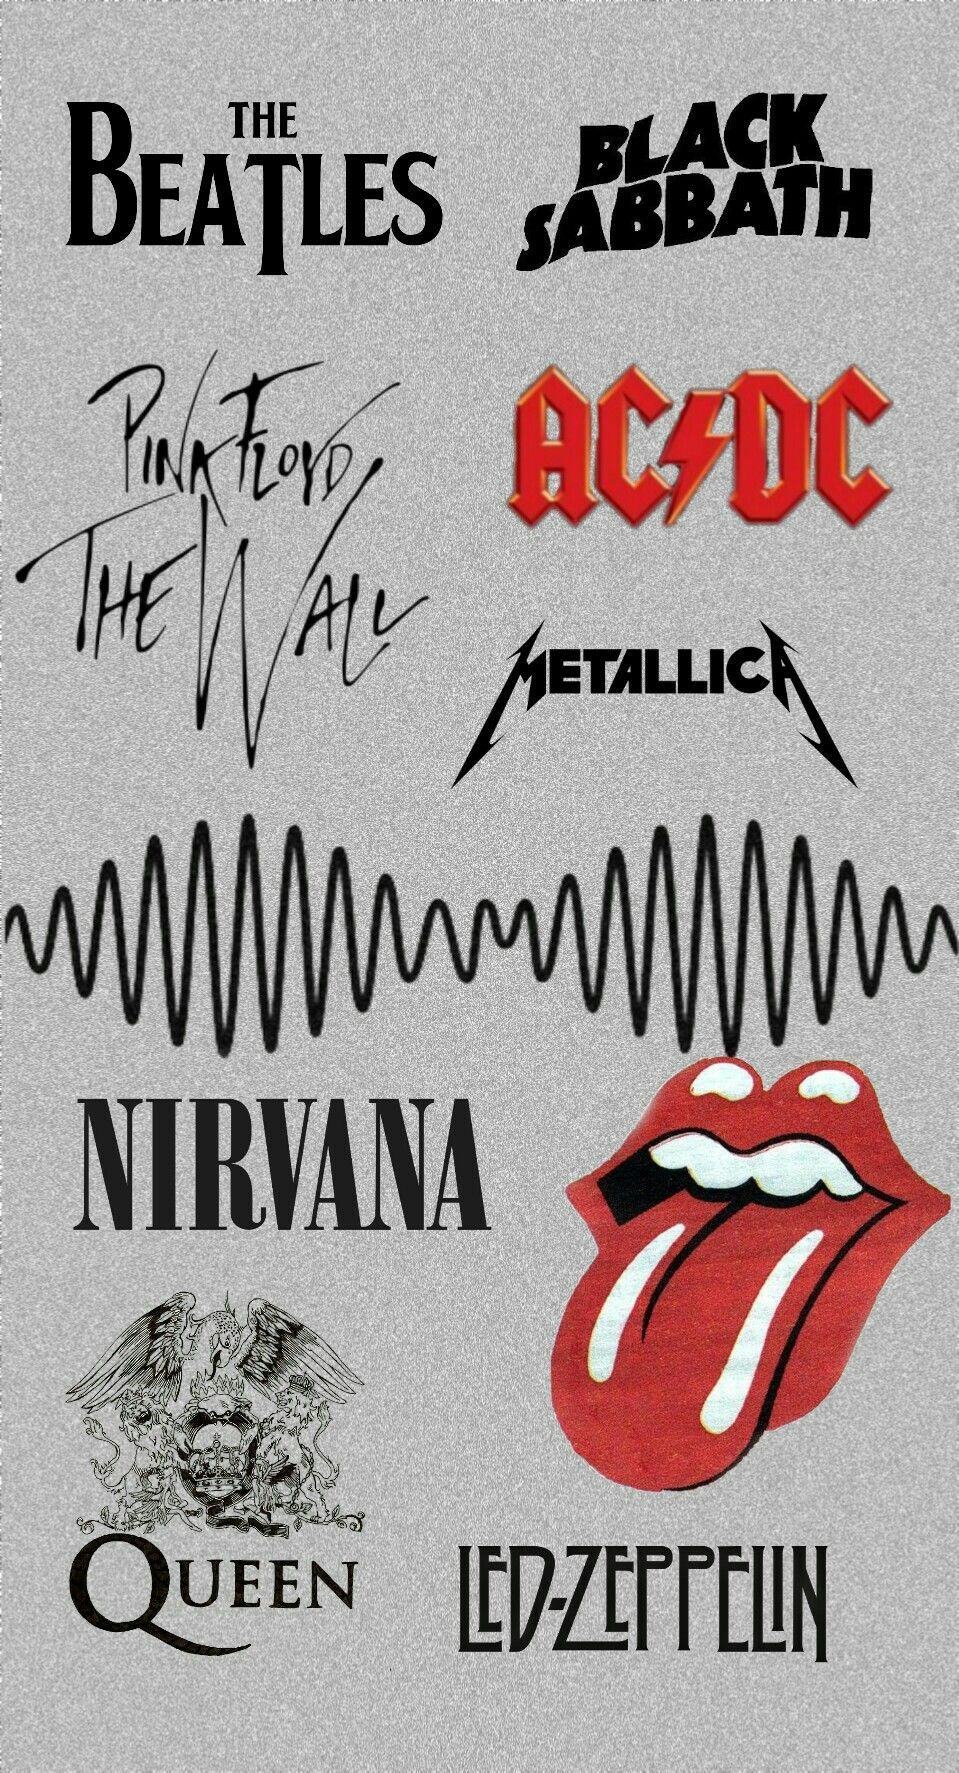 aesthetic rock wallpaper. Band wallpaper, Rock band posters, Rock posters